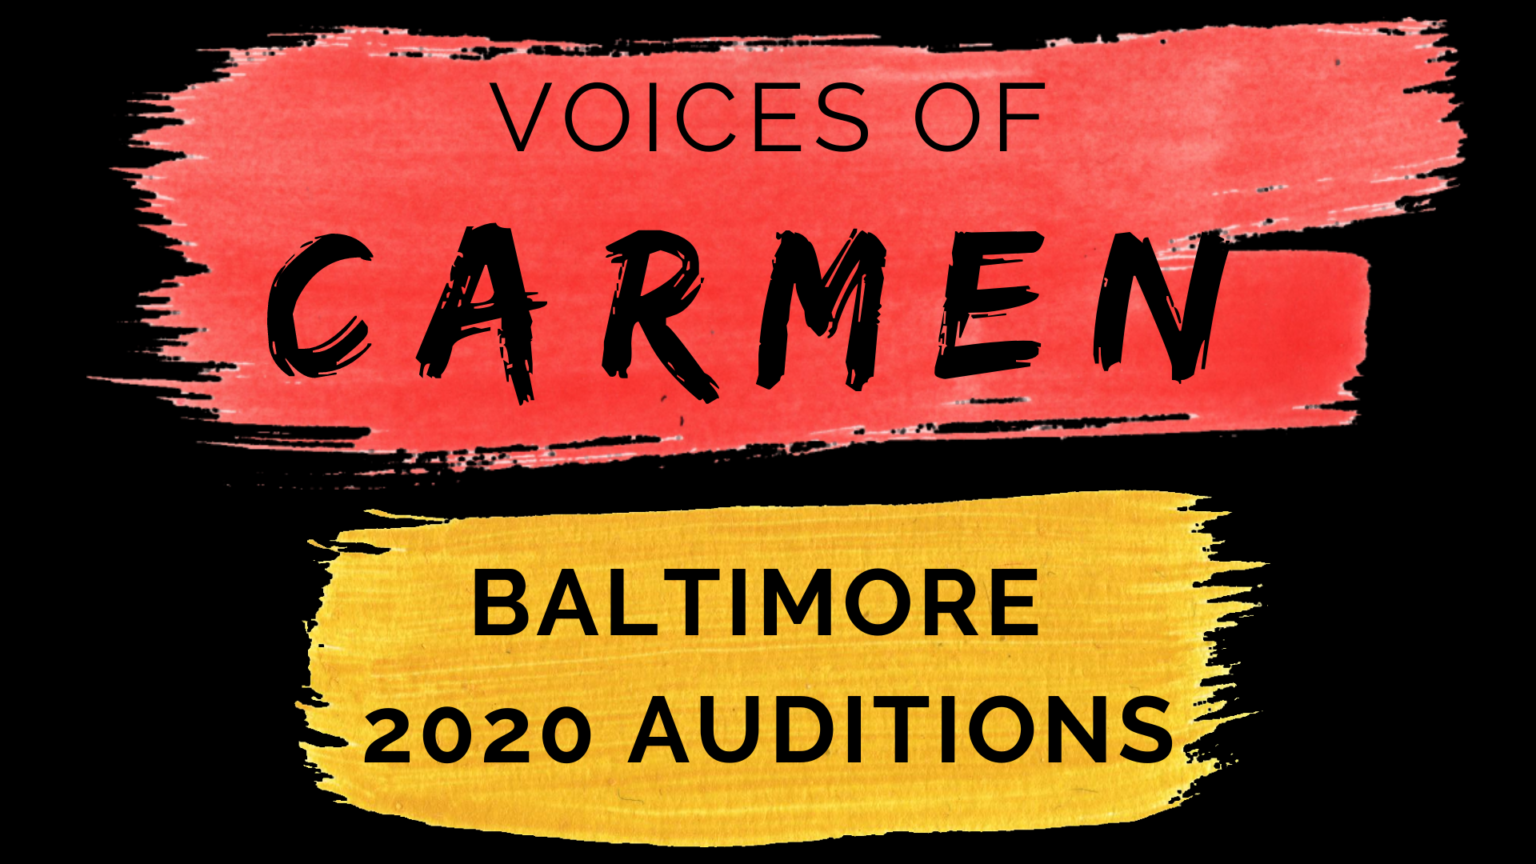 Voices of Carmen 2020 Auditions Dance & Bmore